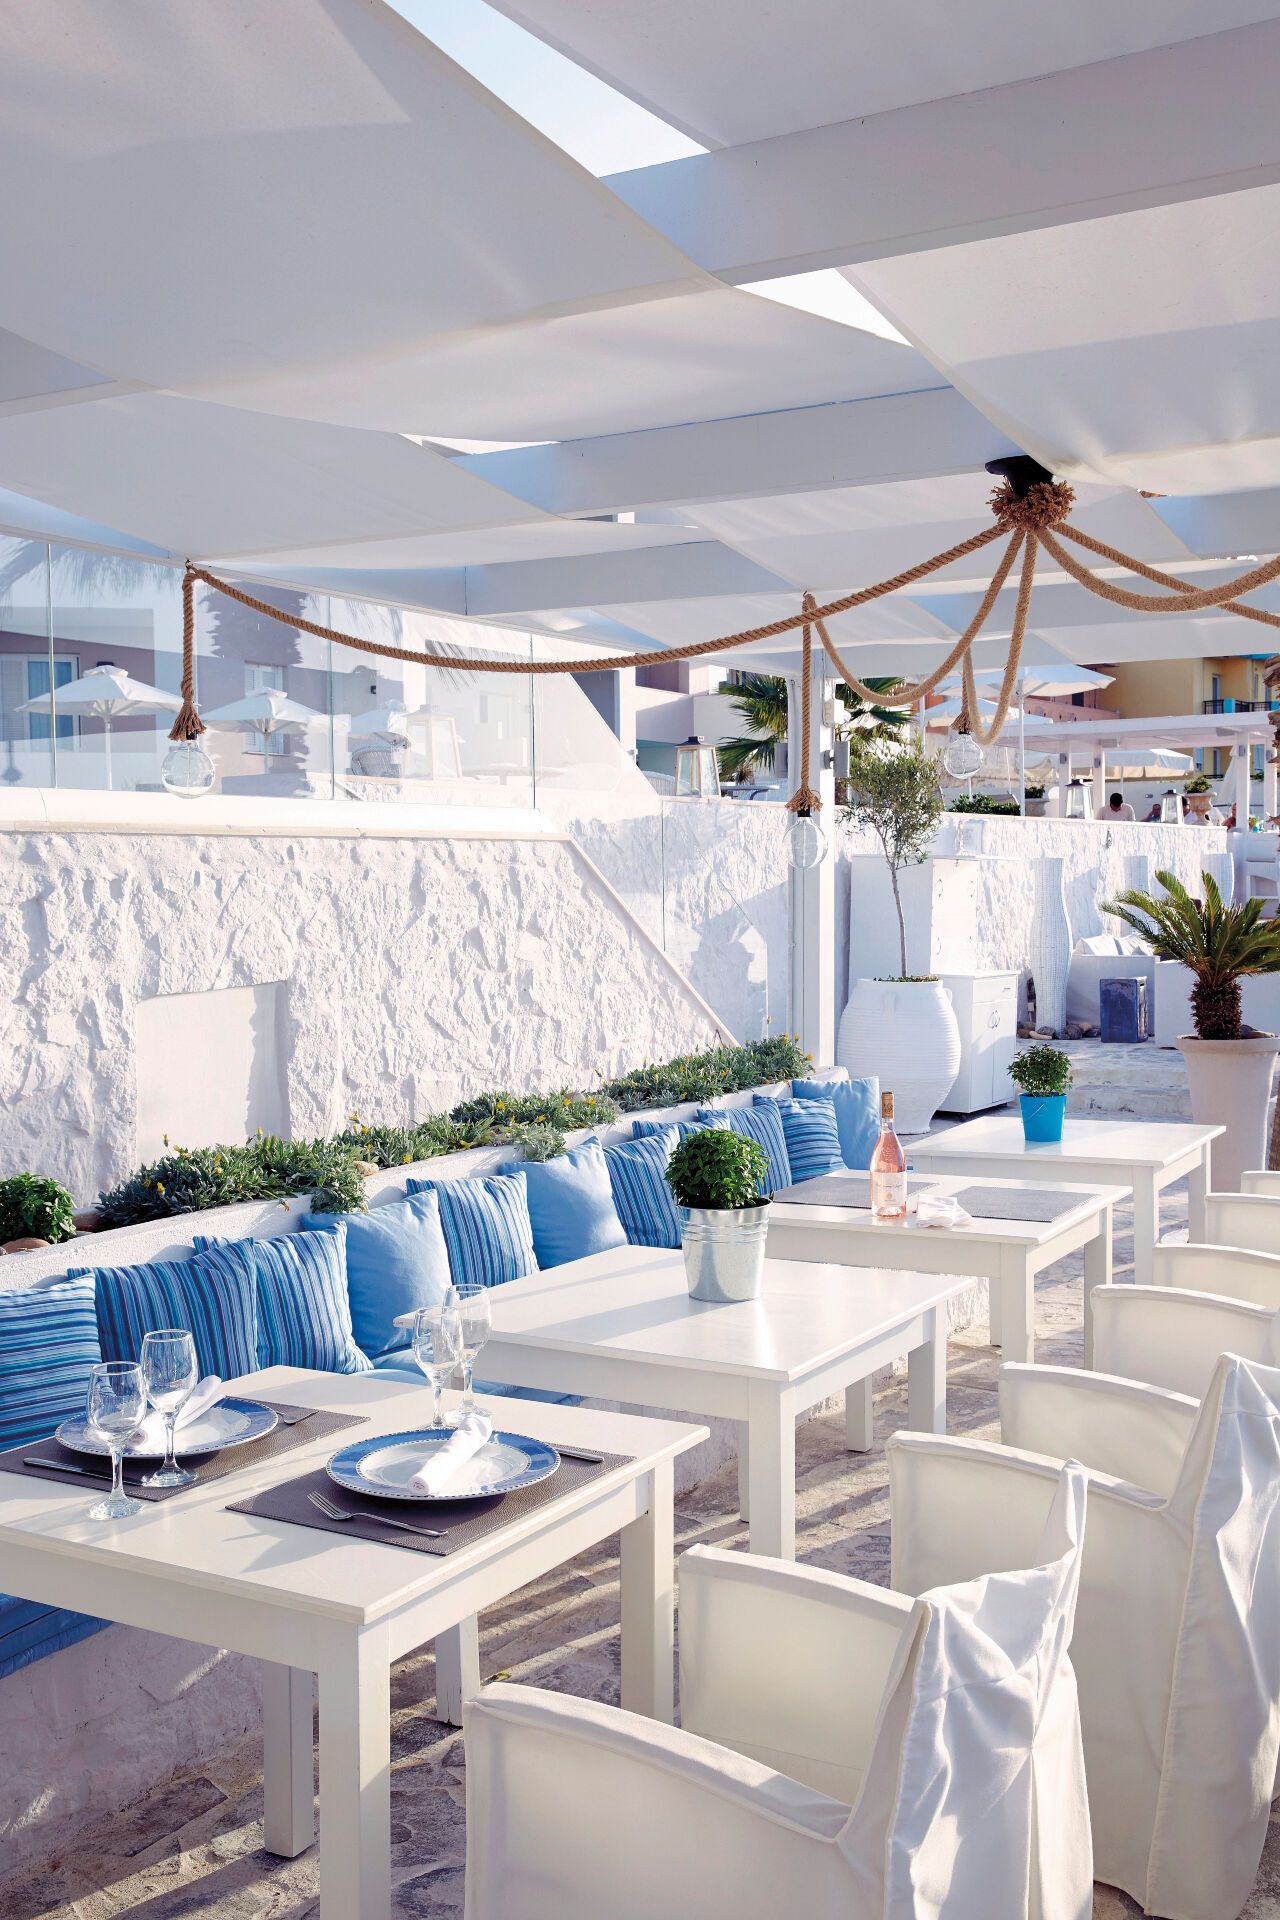 Crète - Rethymnon - Grèce - Iles grecques - Hotel Petradi Beach 3*